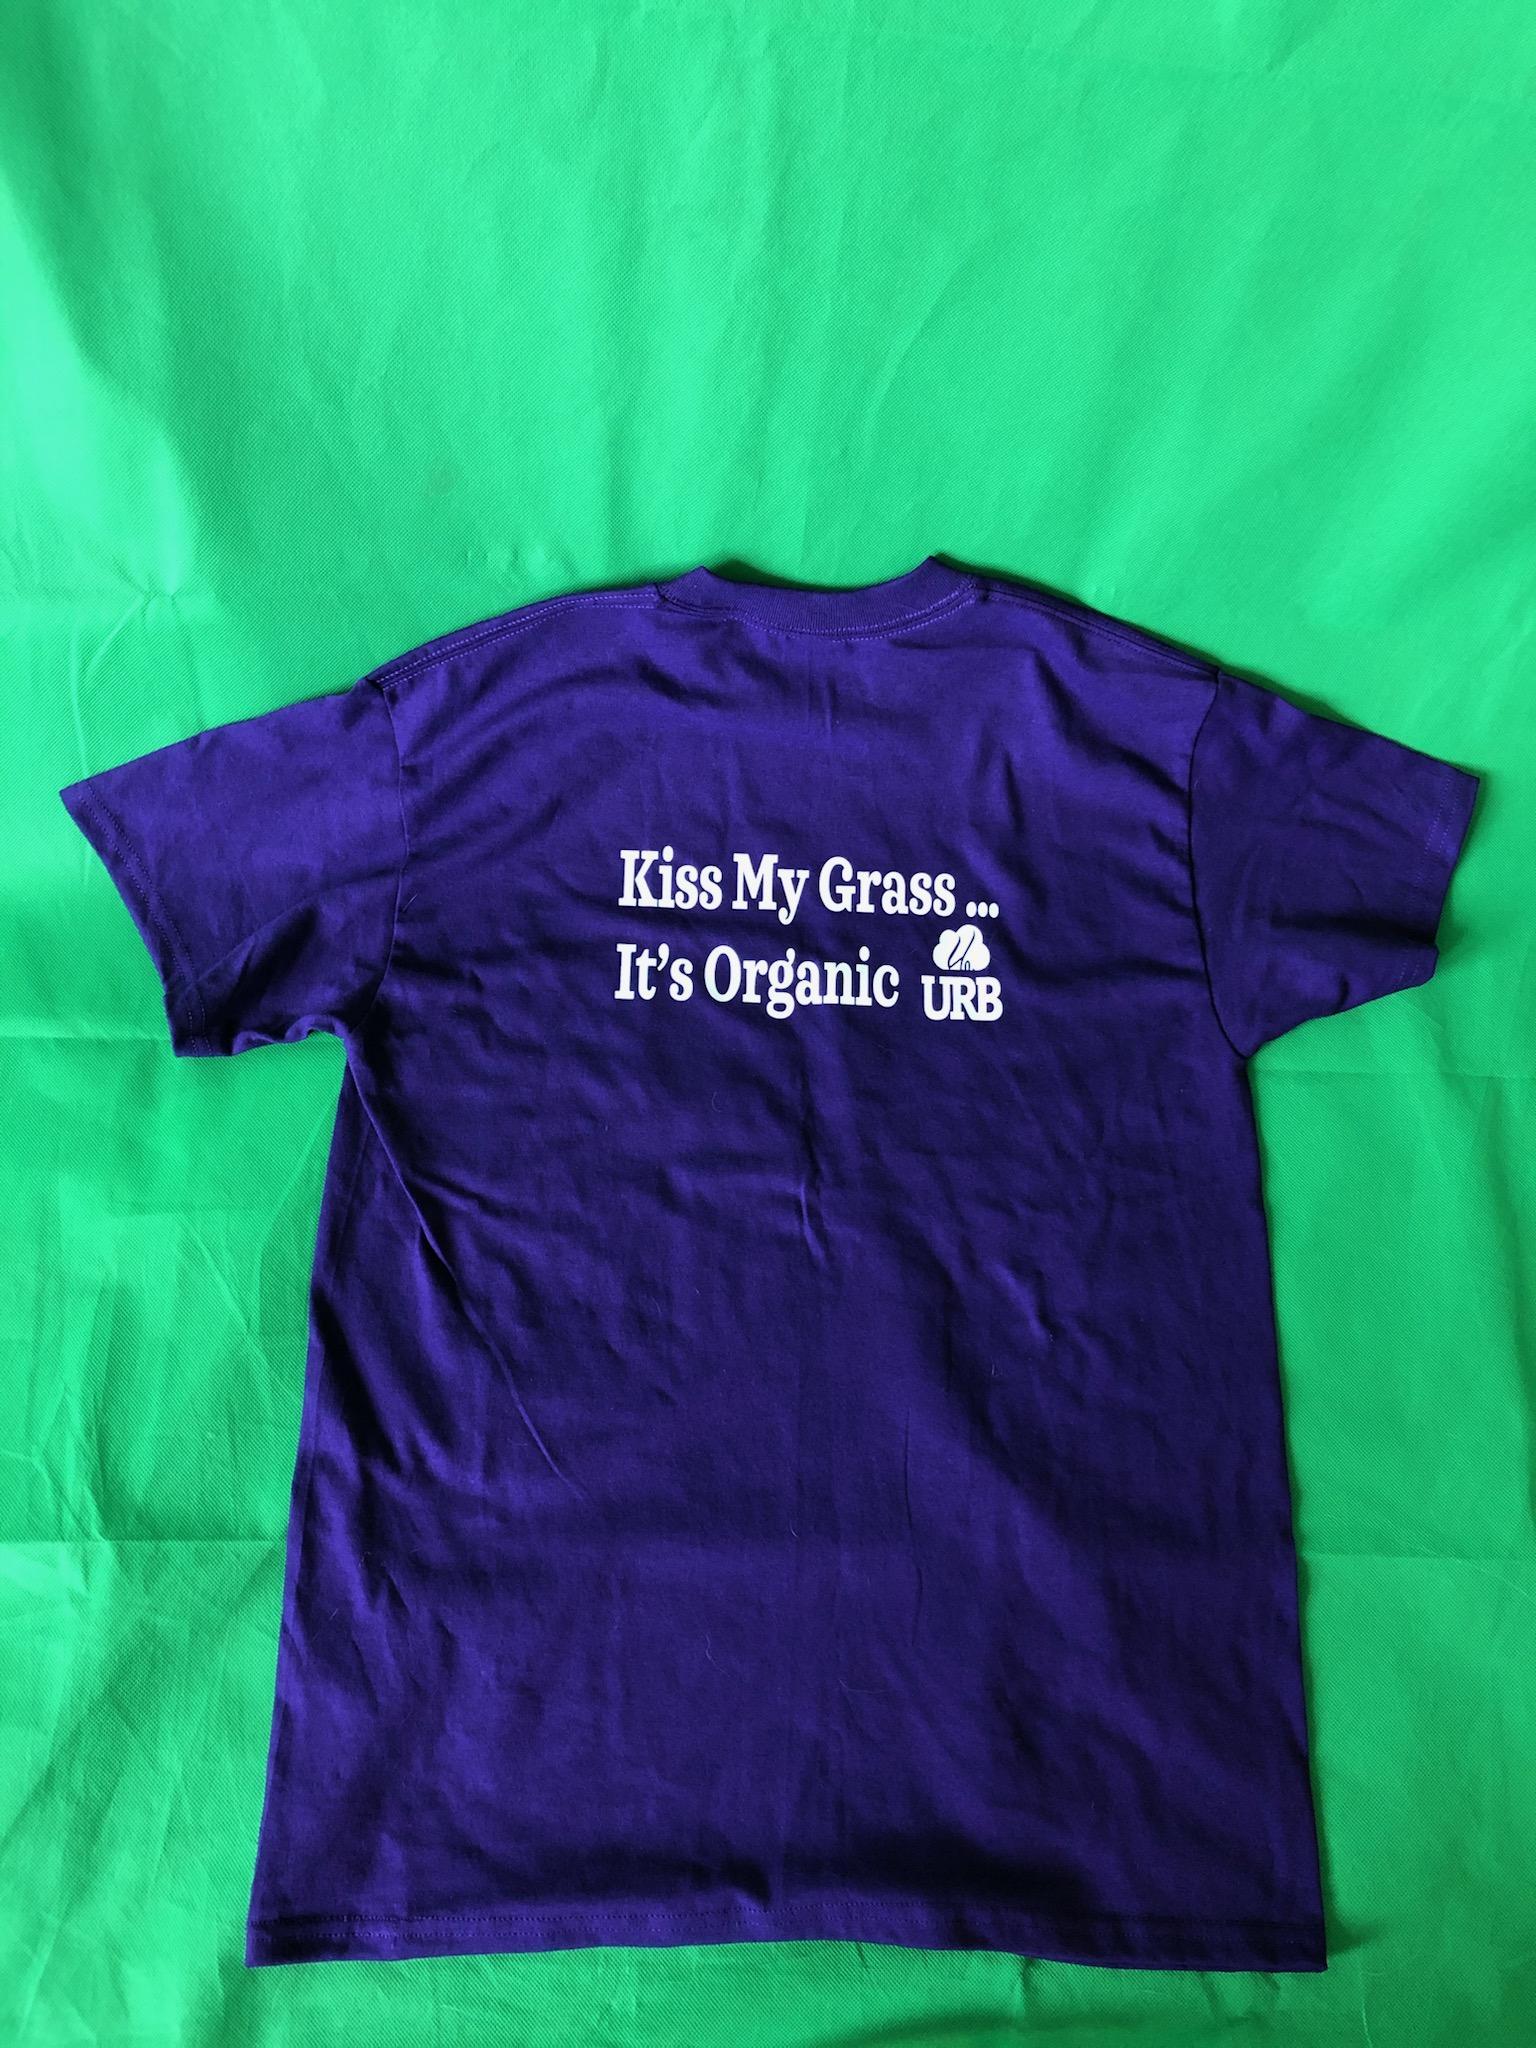 Original URB T-Shirt Microbial Inoculant legalizeURB 